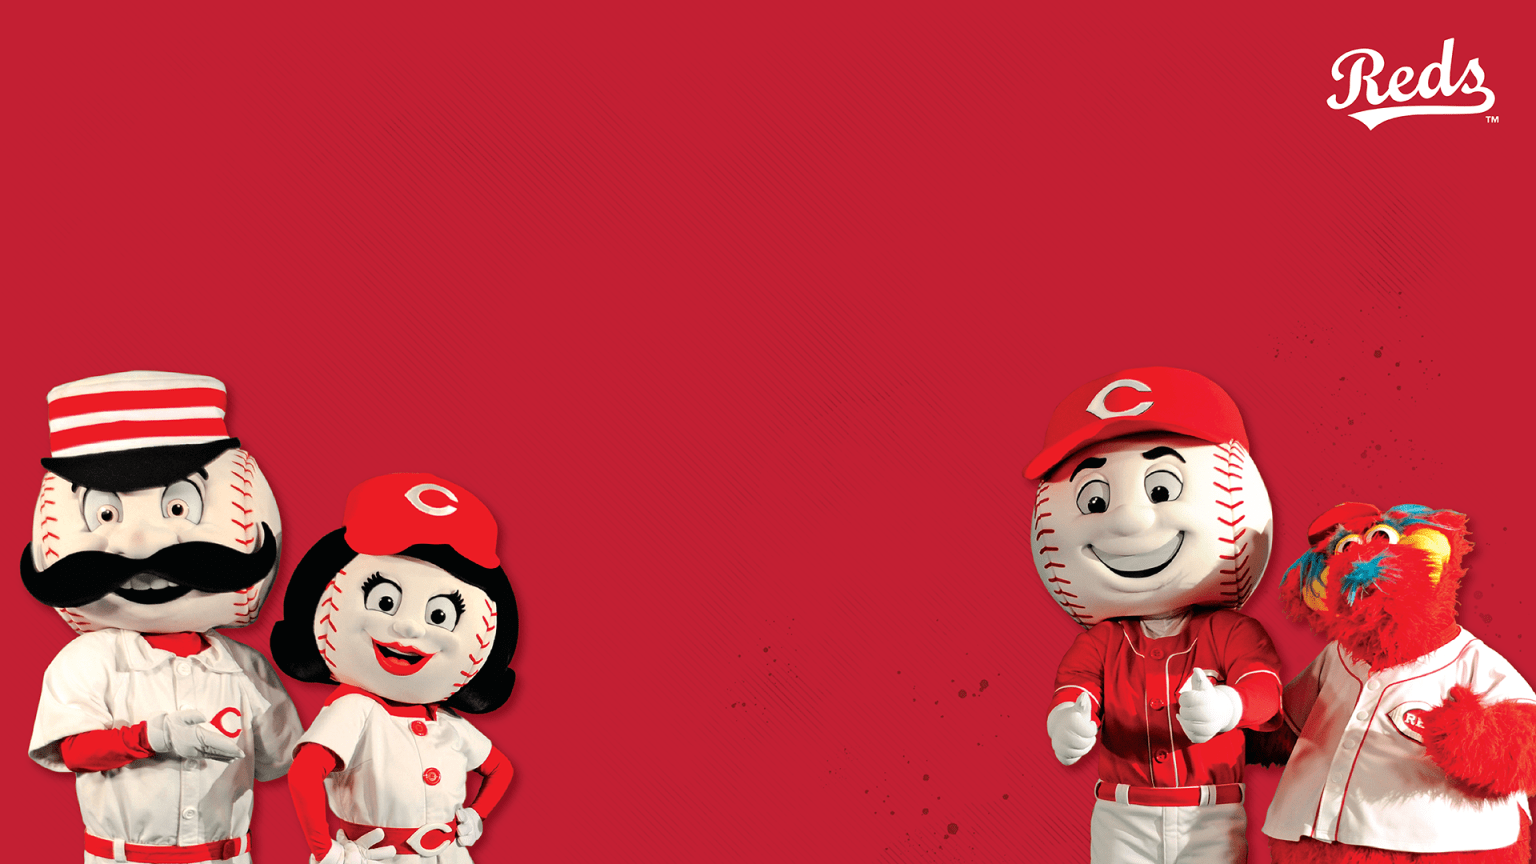 Cincinnati Reds Desktop Wallpaper  Cincinnati reds, Cincinnati reds game, Baseball  wallpaper